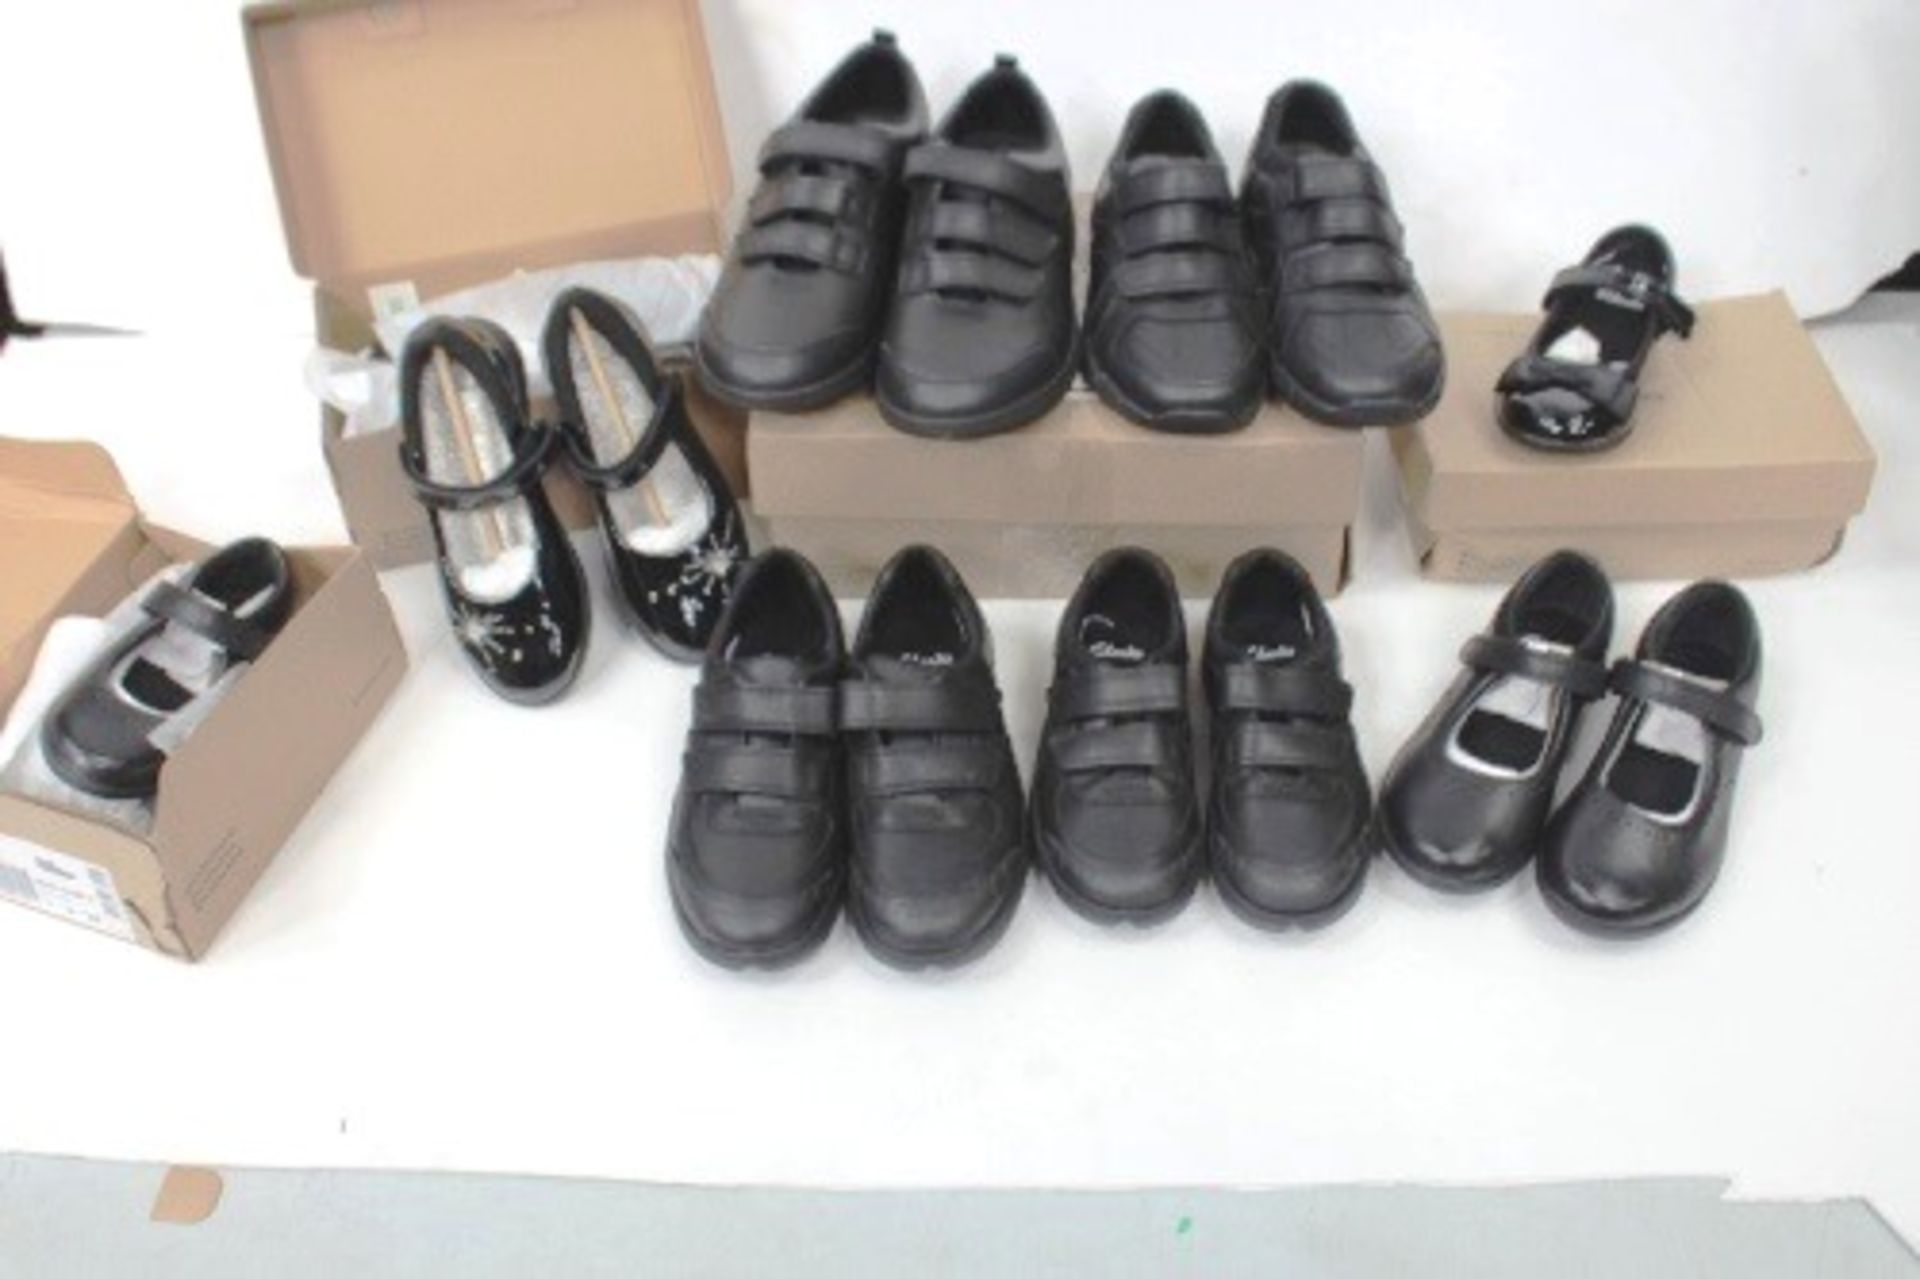 10 x Pairs Clarks children's black shoes various styles / sizes - New (ES10D)